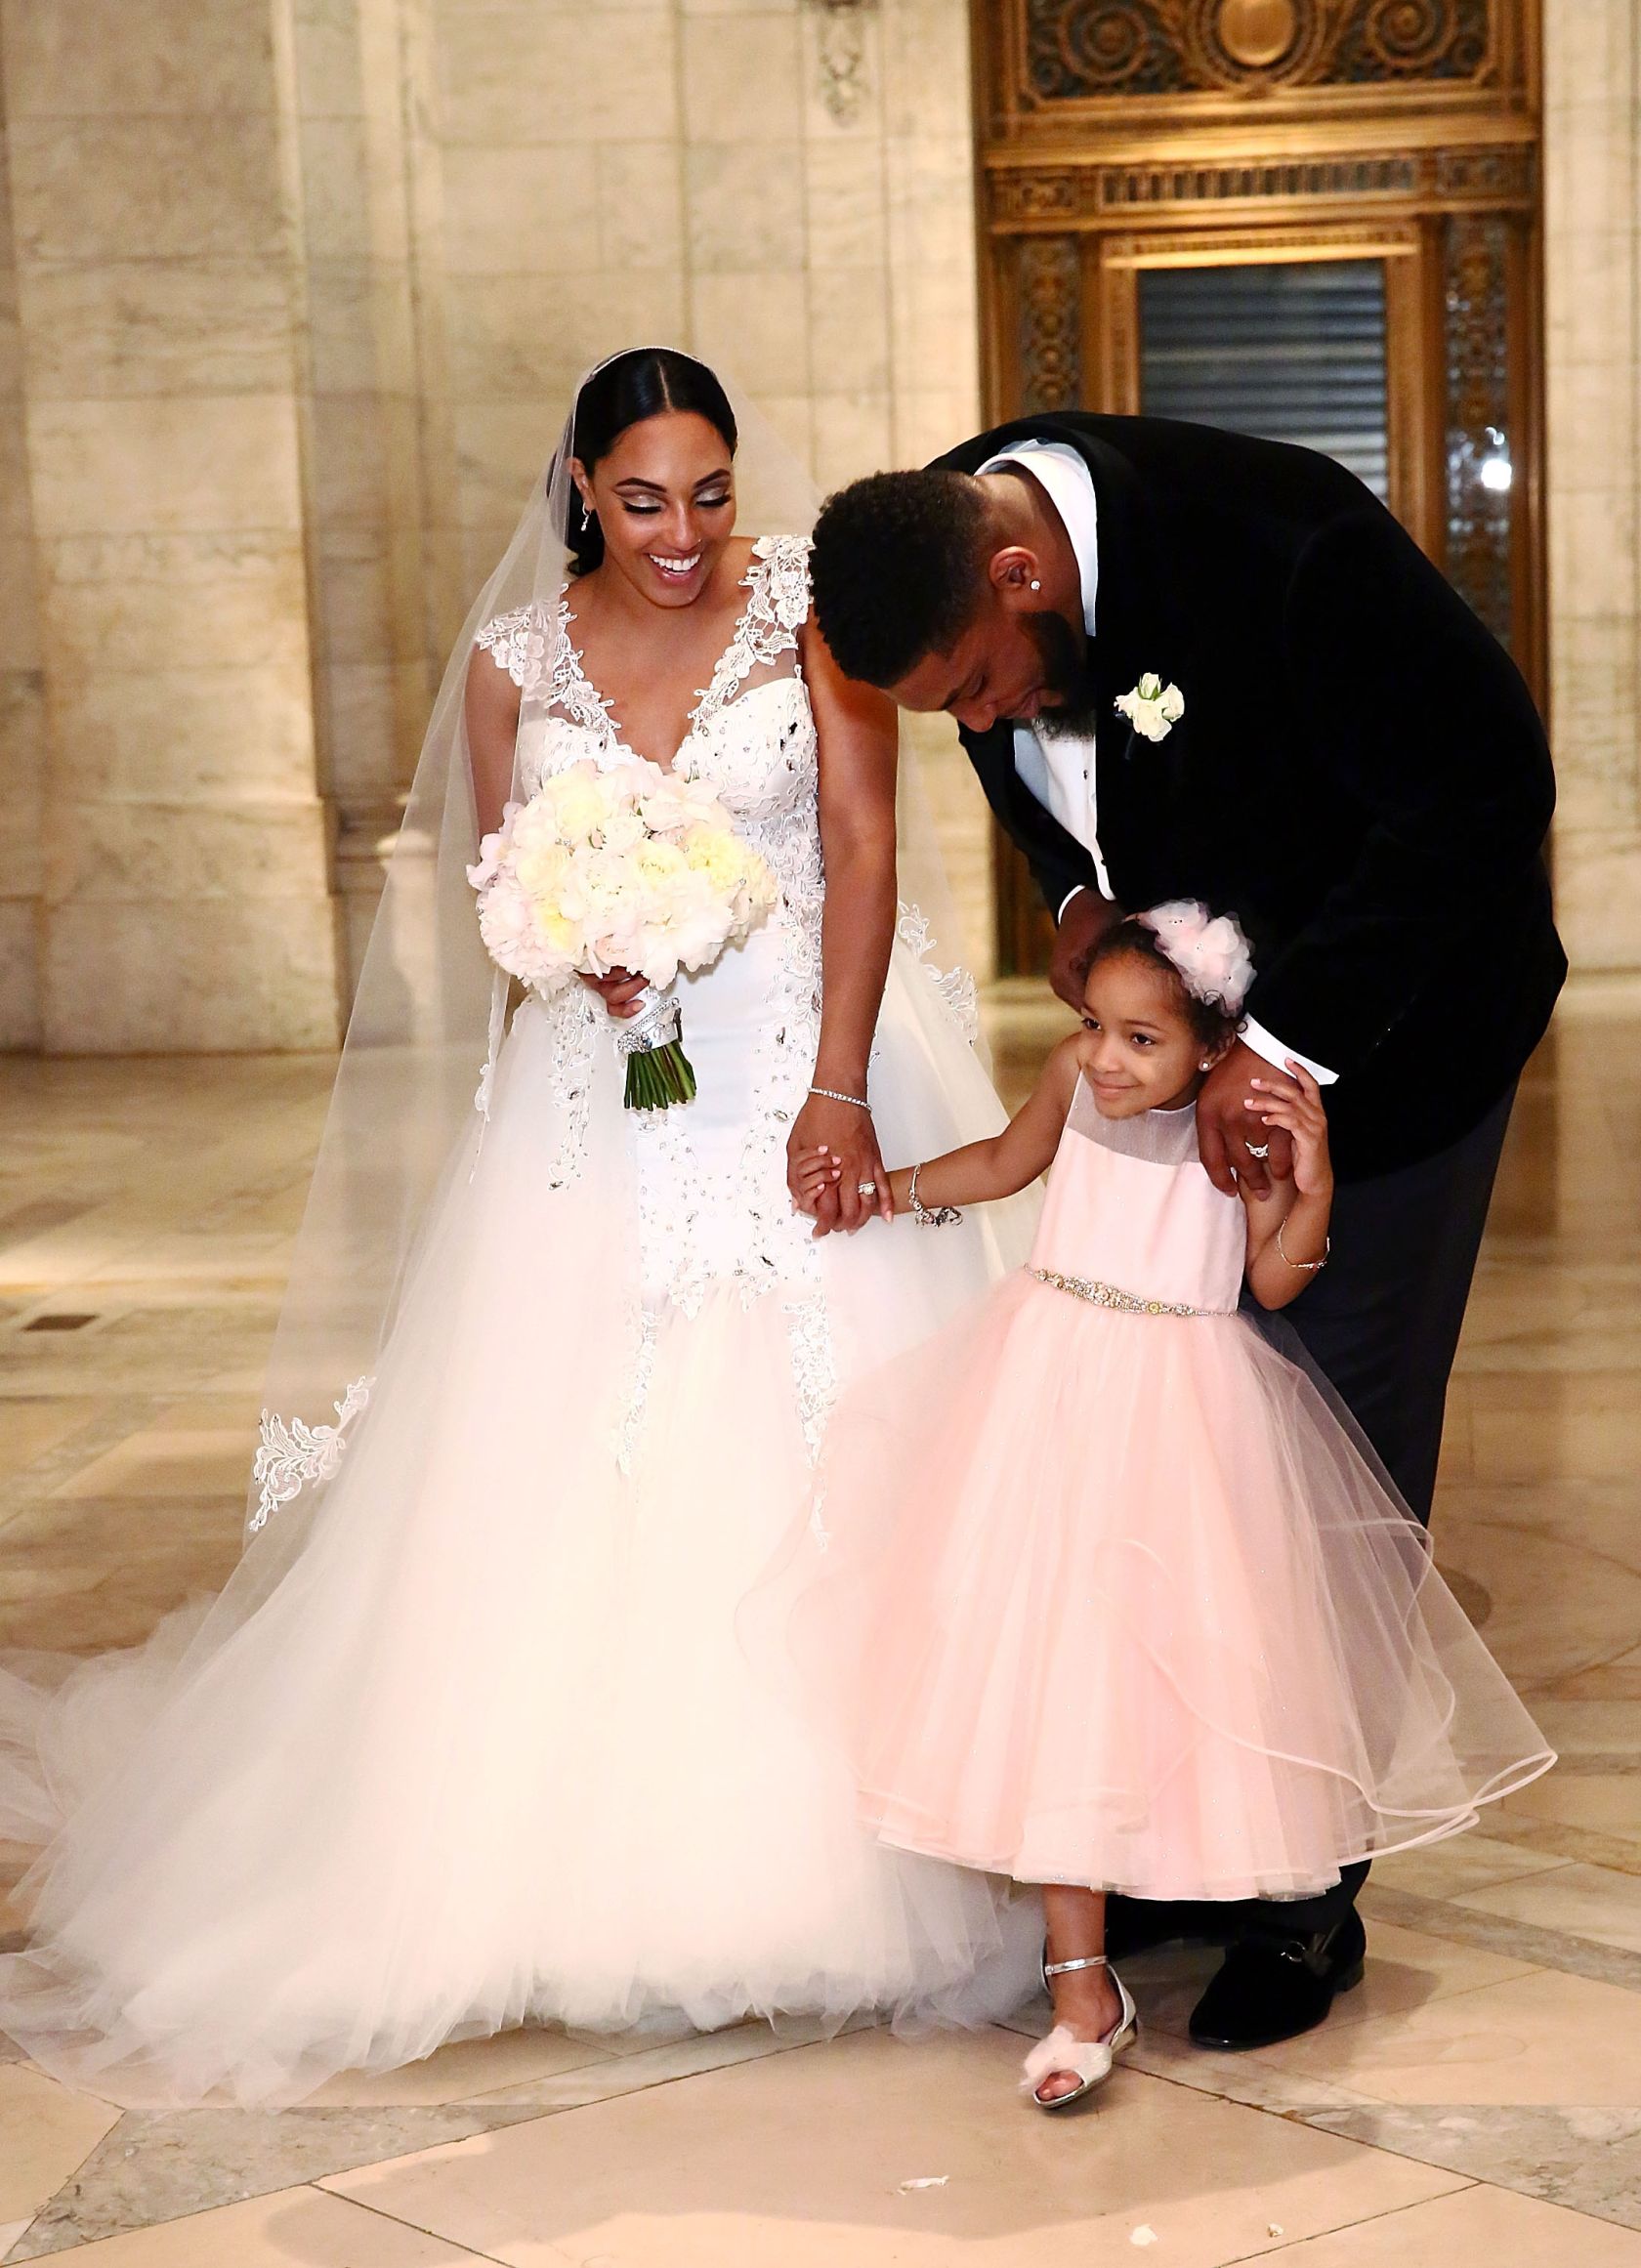 The Knot Dream Wedding - NFL Player Devon Still Marries Asha Joyce